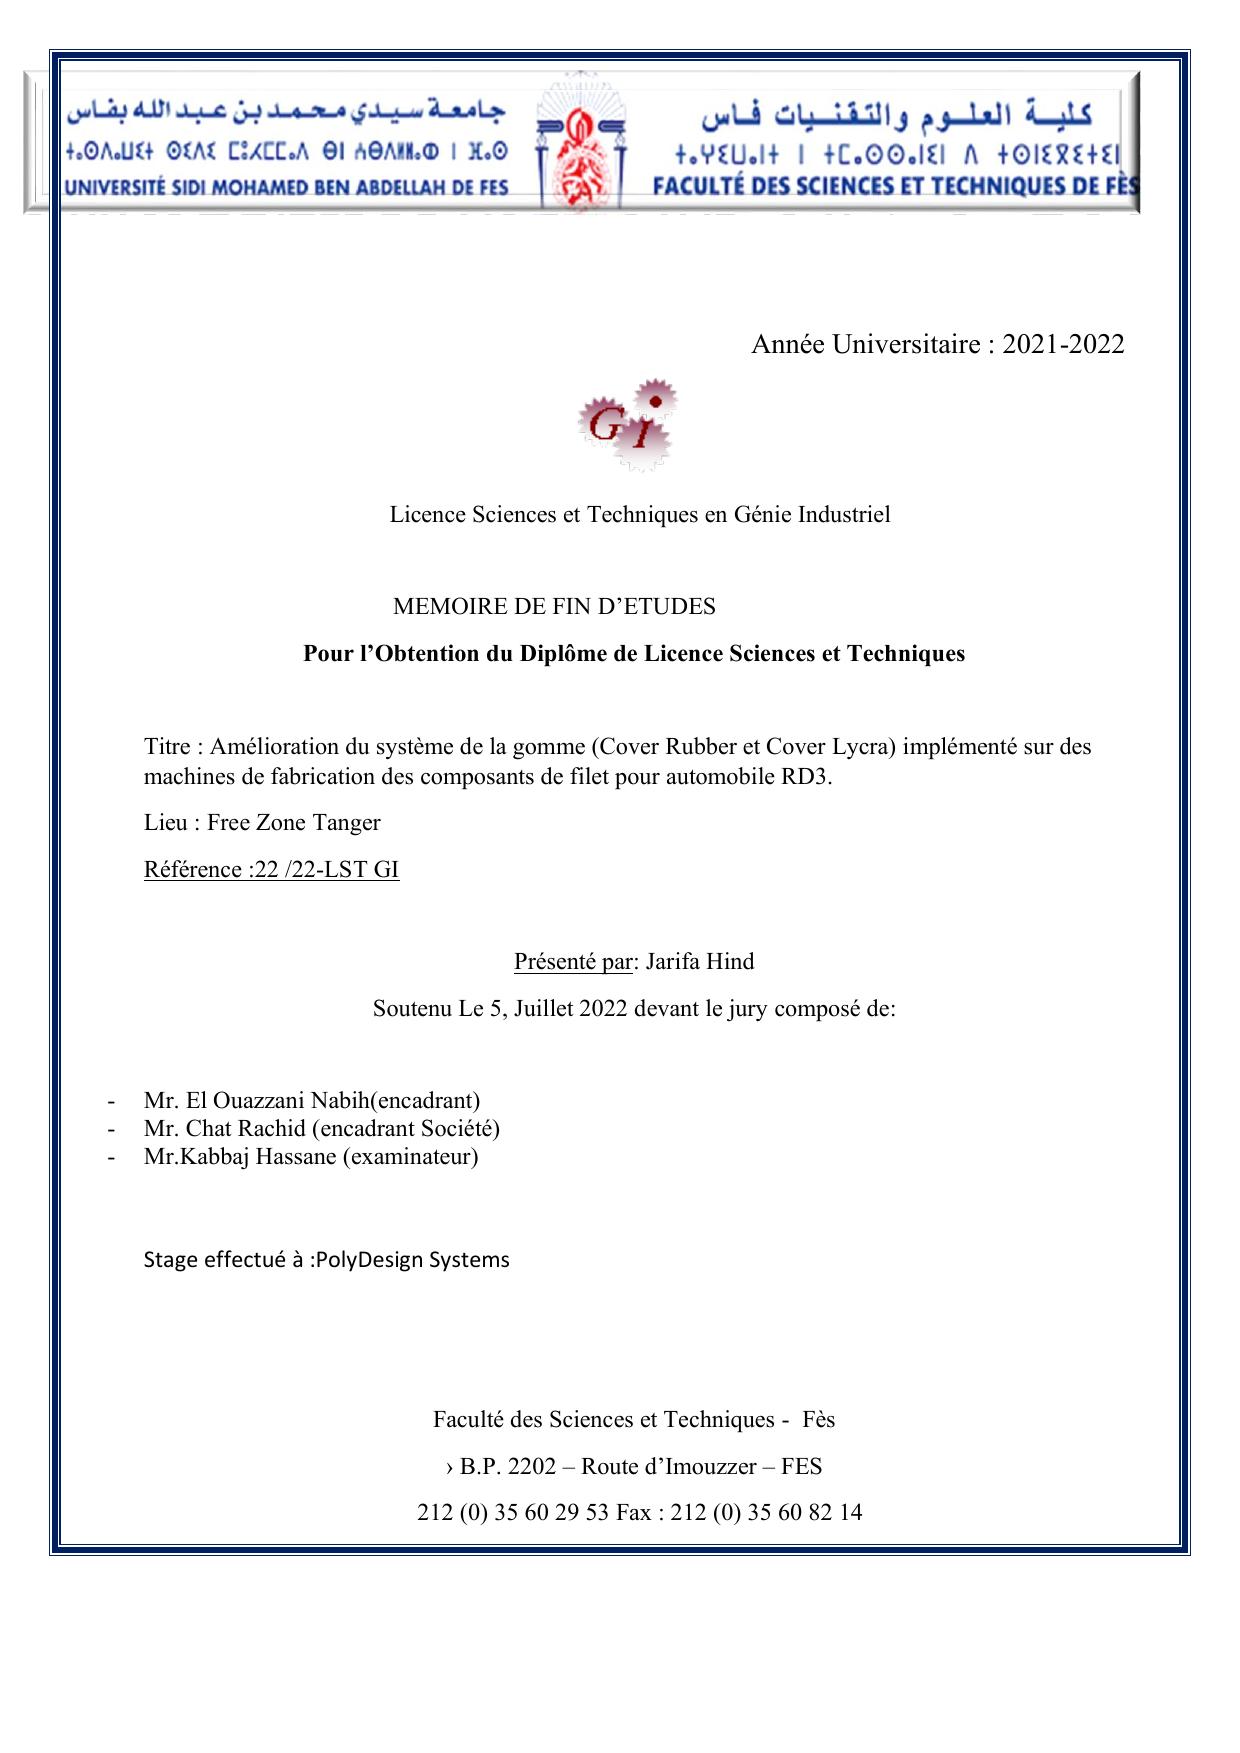 rapport finale hind jarifa (1).pdf